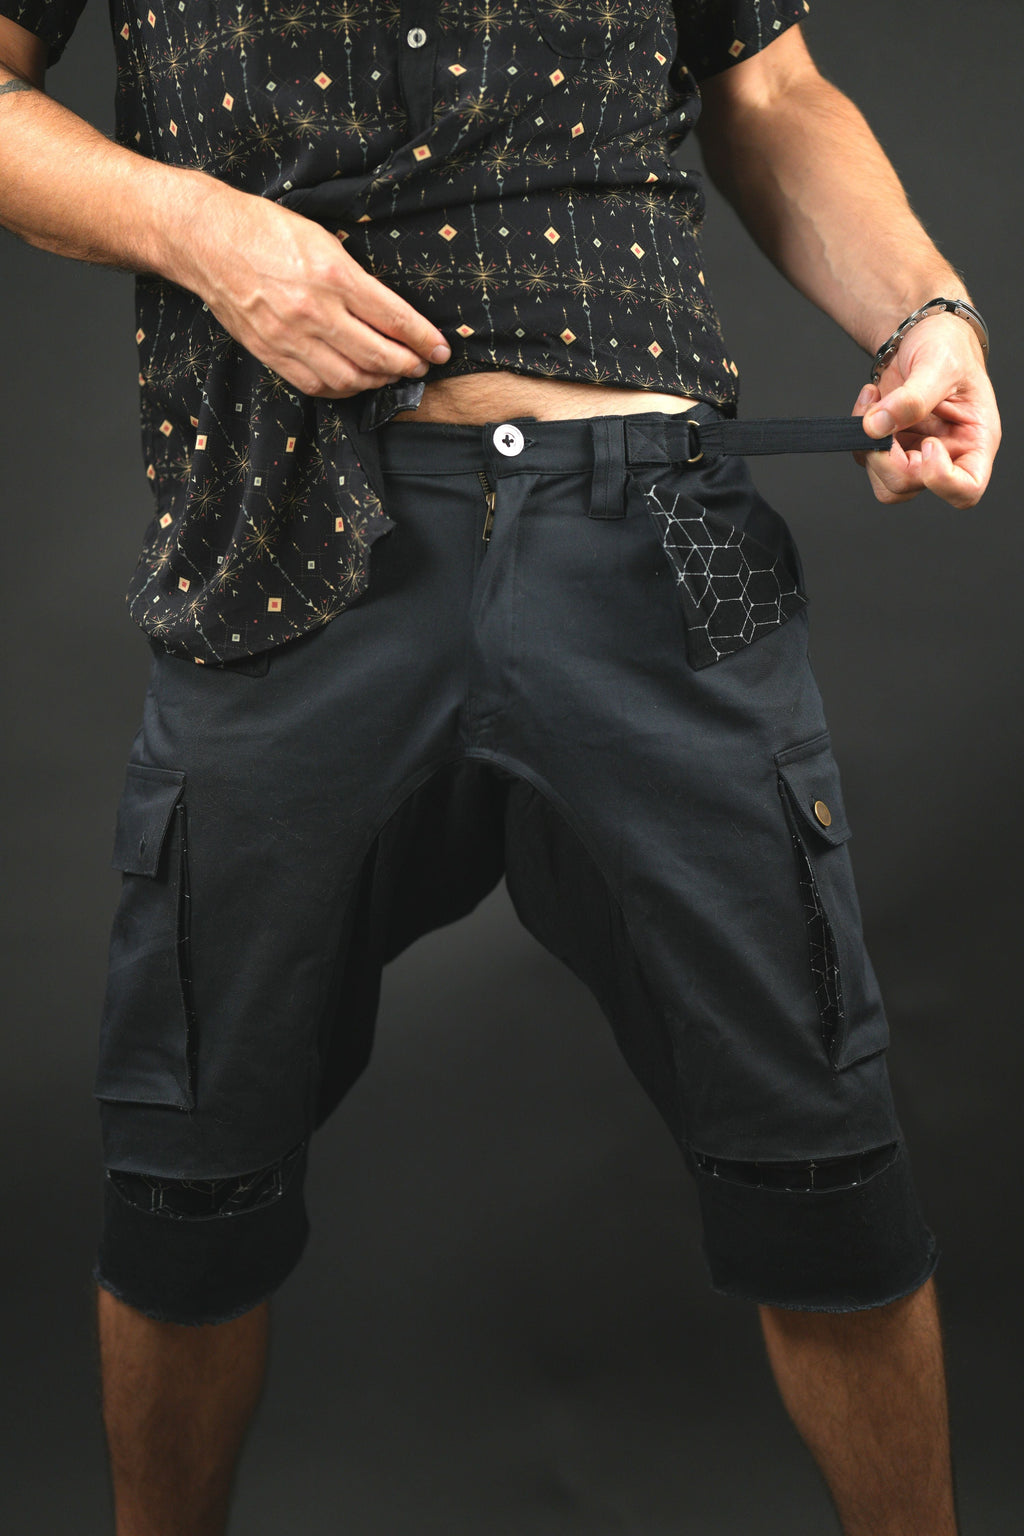 Drop Crotch Shorts for Men Designs – Sheron